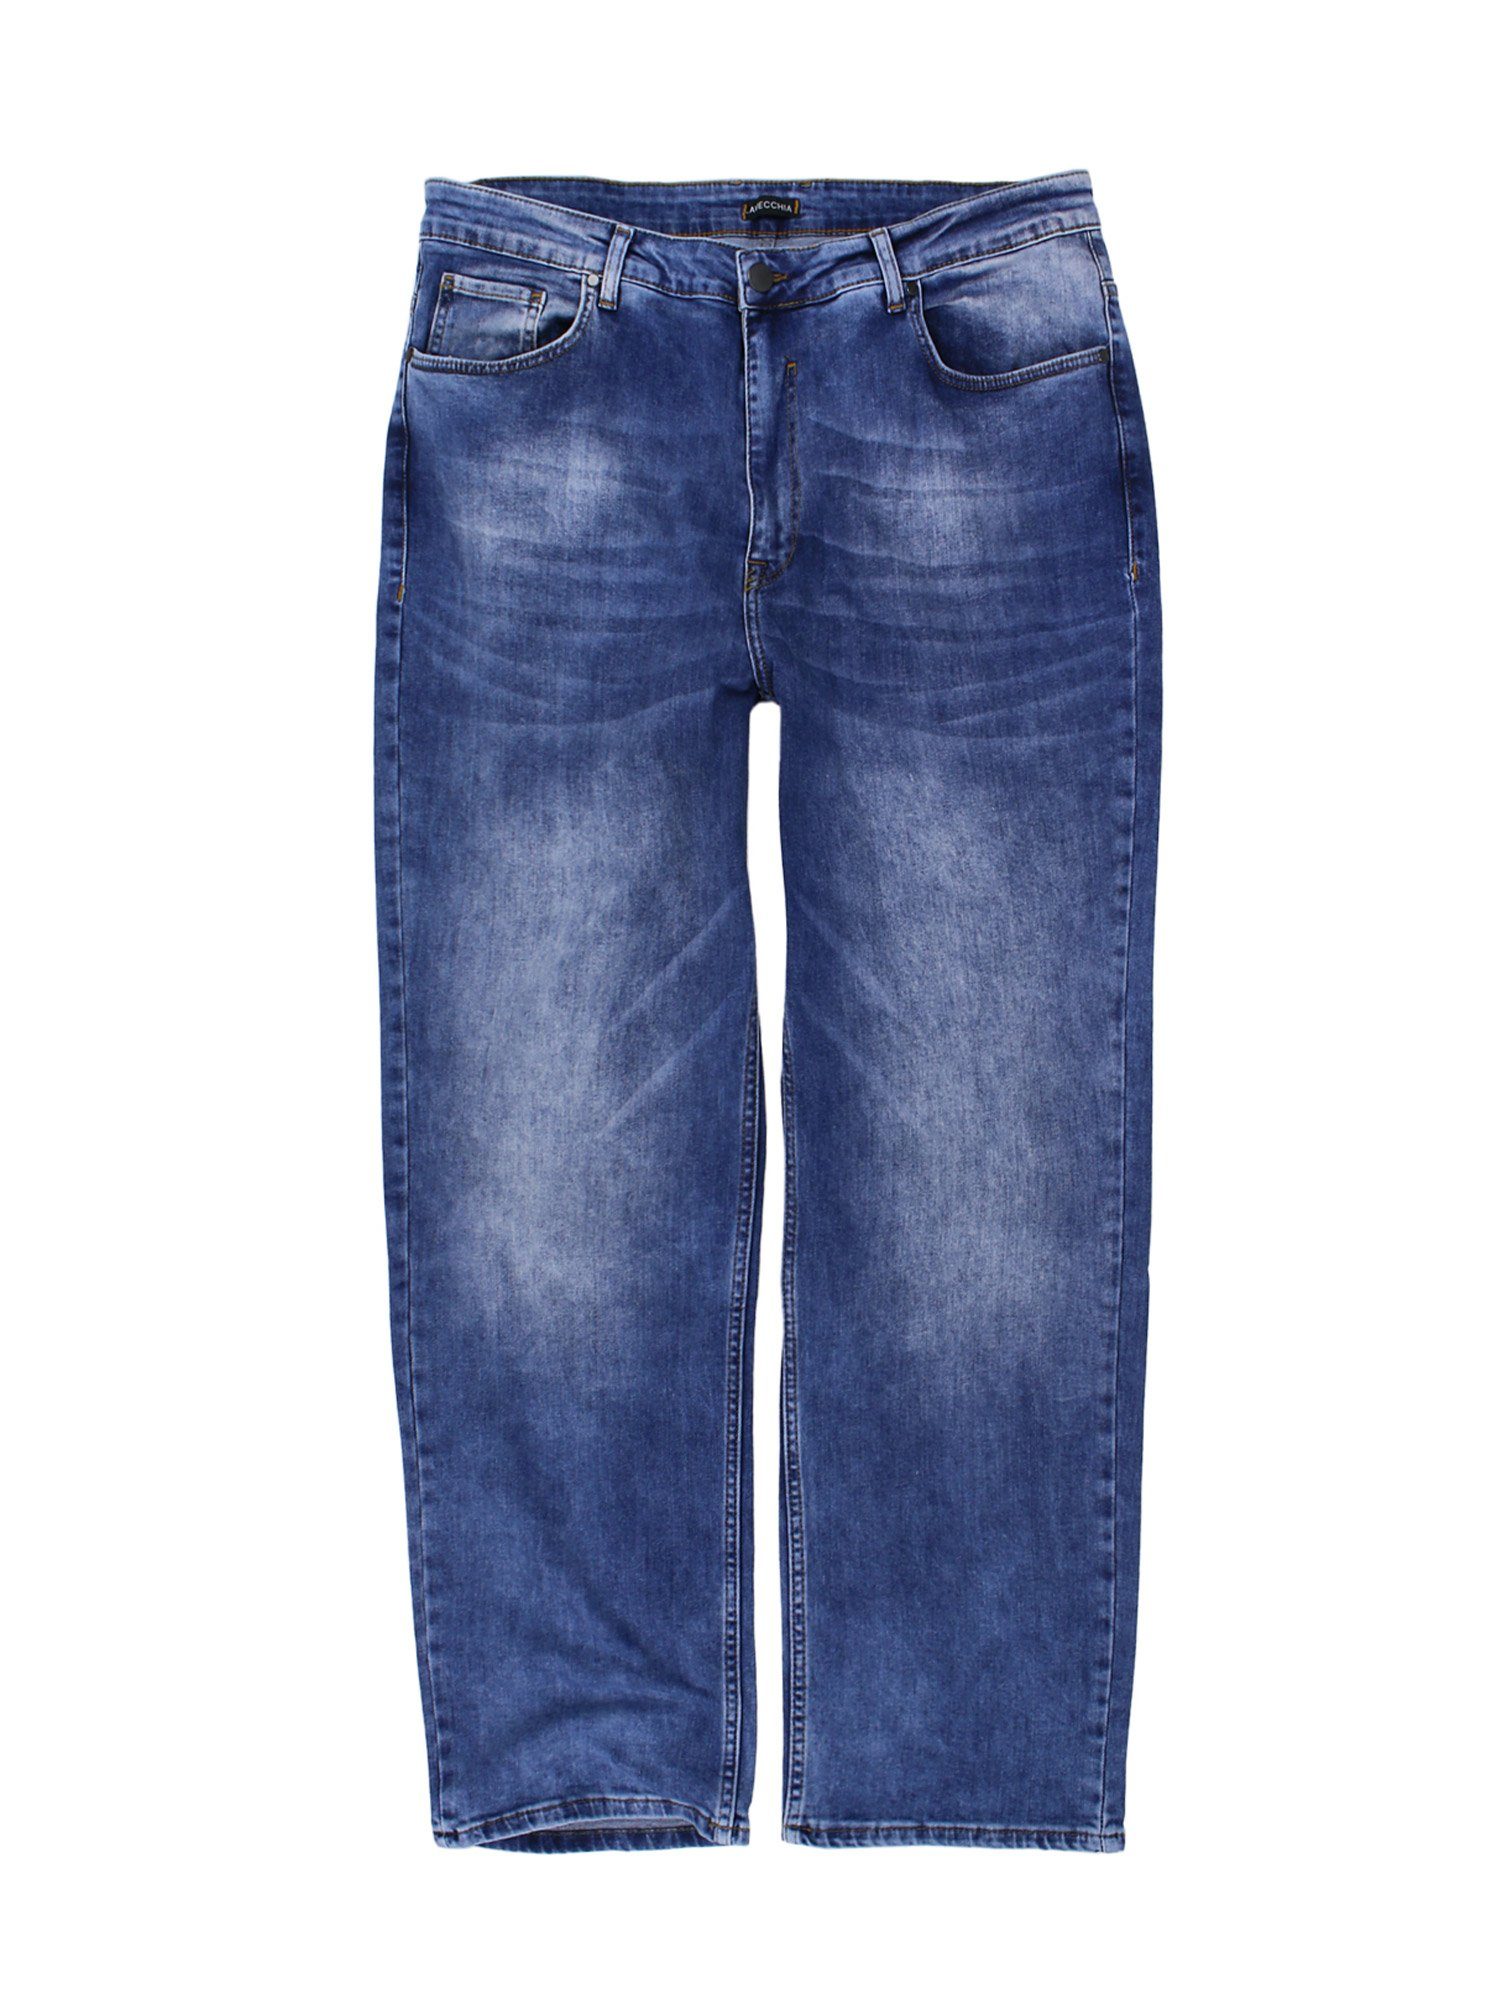 Elasthan Herren Jeanshose stoneblau Lavecchia mit Comfort-fit-Jeans Übergrößen LV-501 Stretch